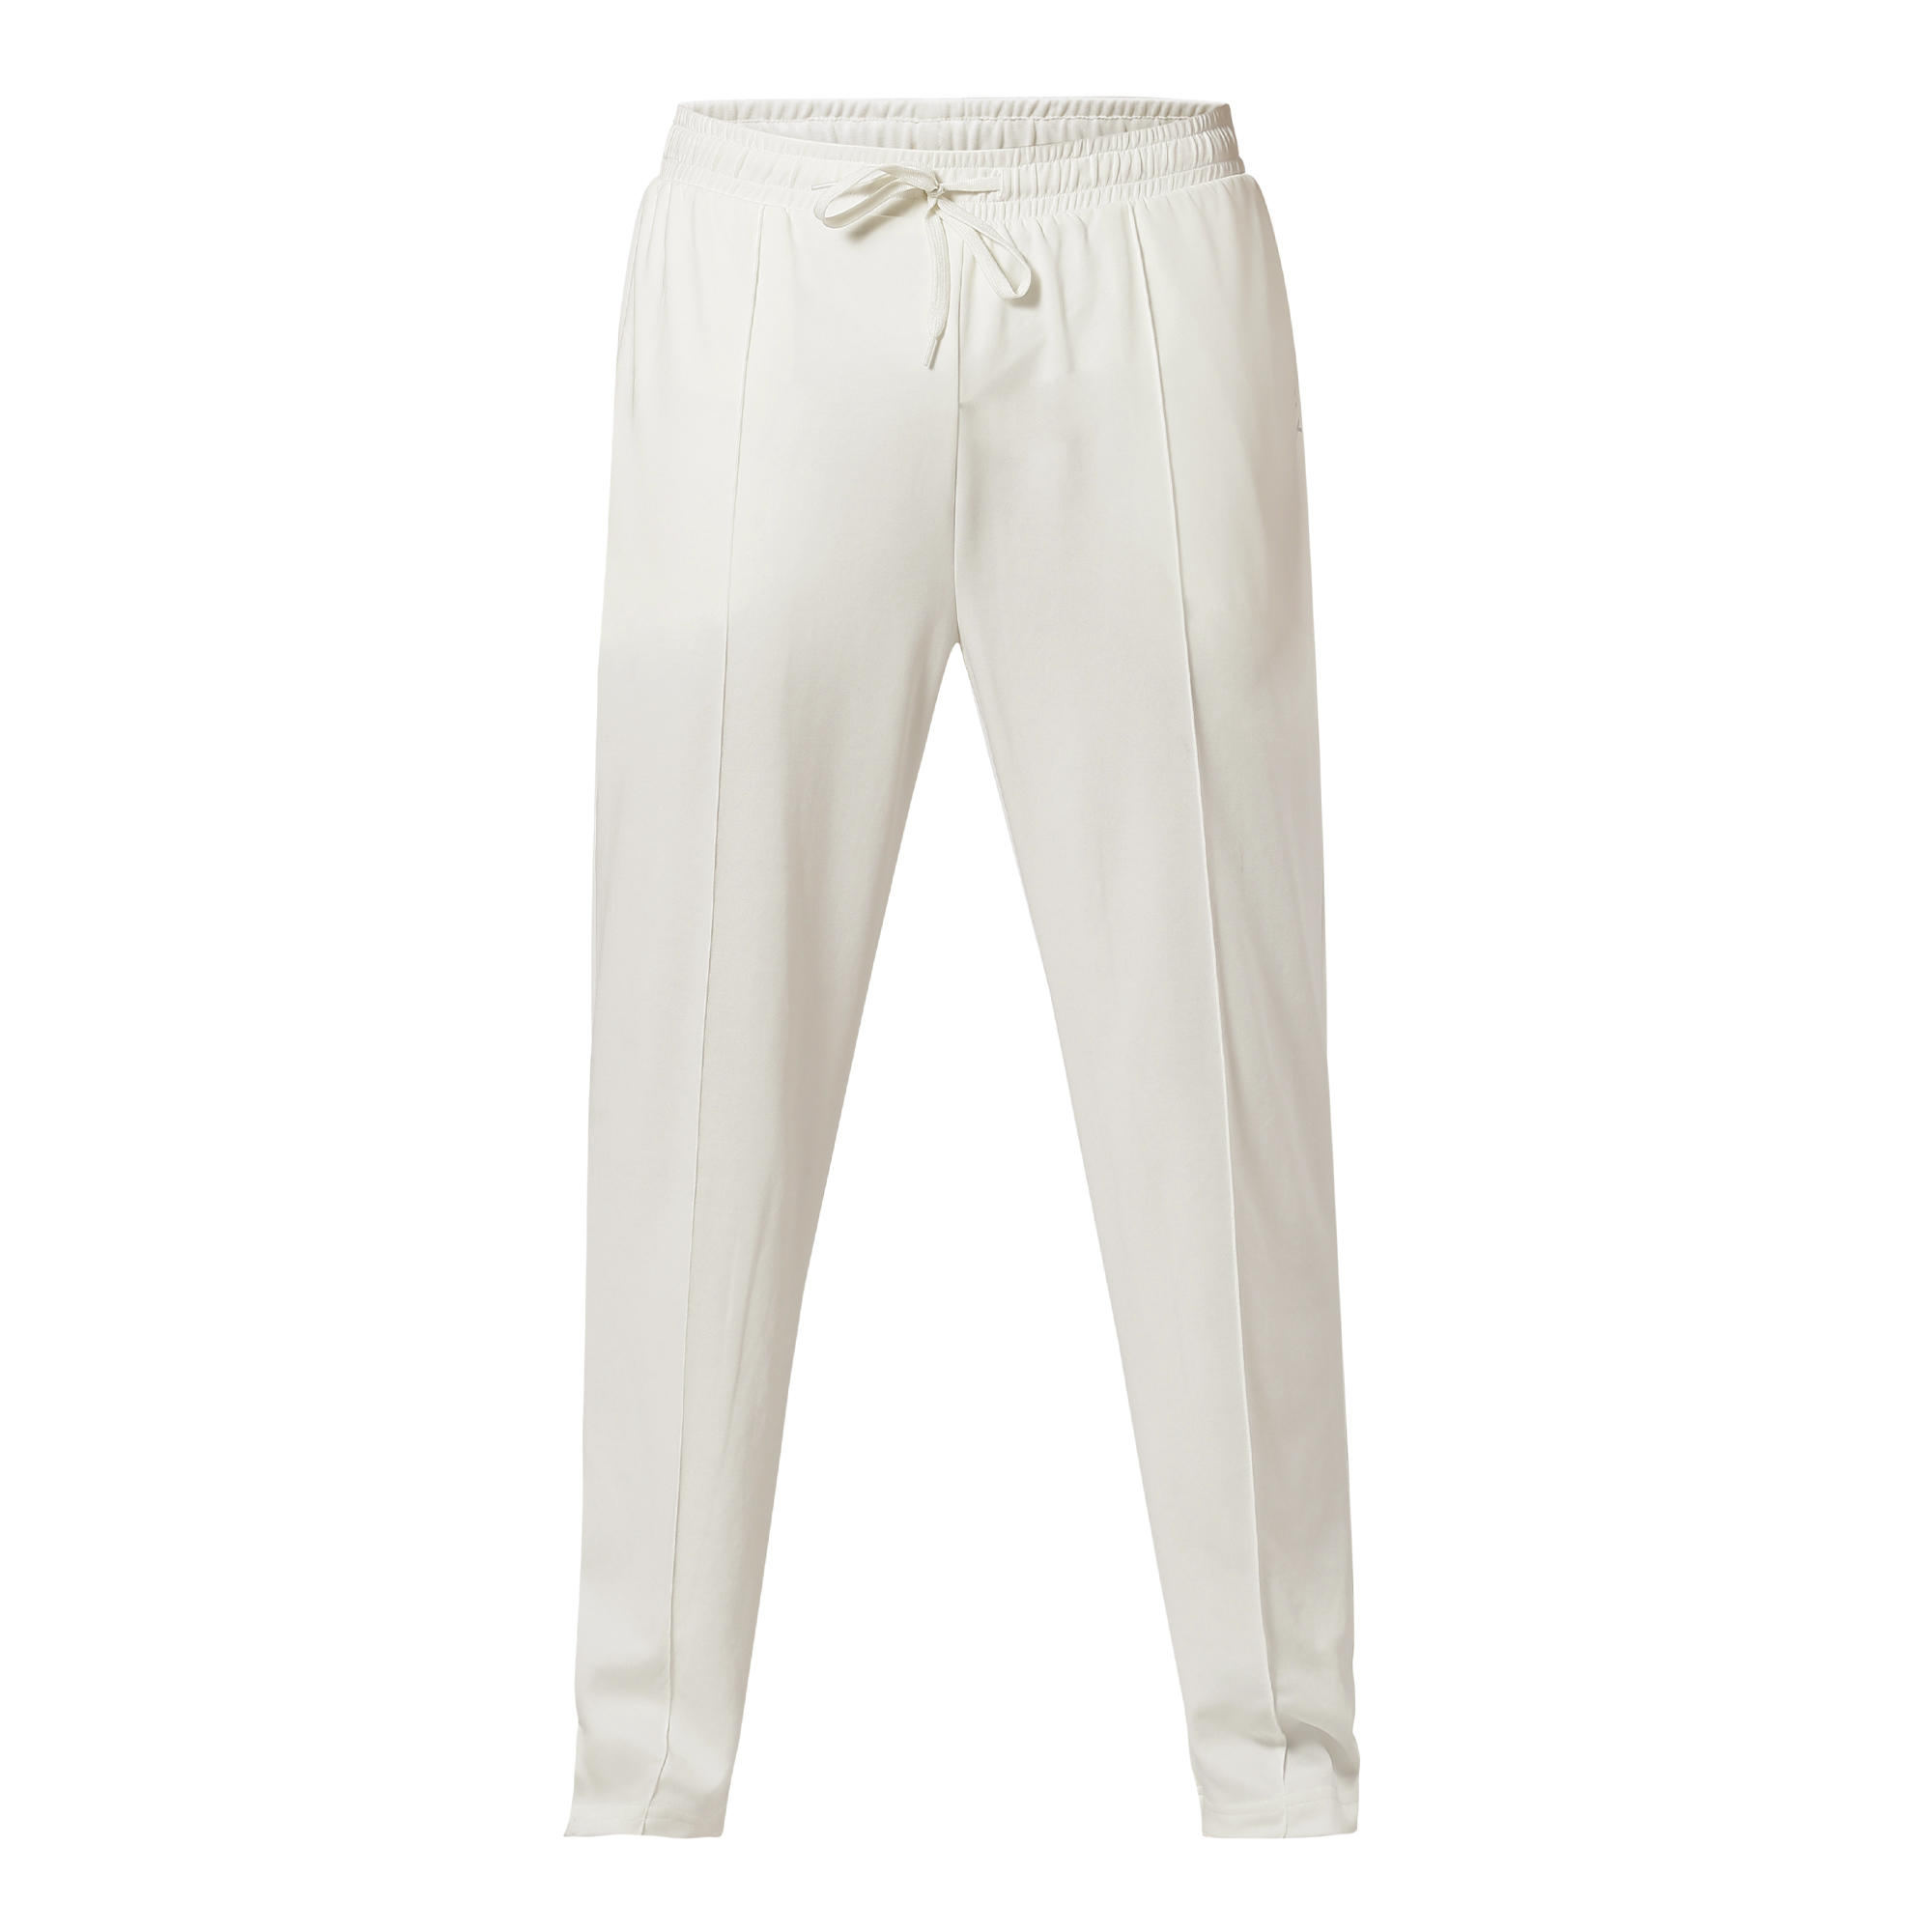 Buy Men's Cricket Taper Fit Trackpants TP 900, Black Online | Decathlon